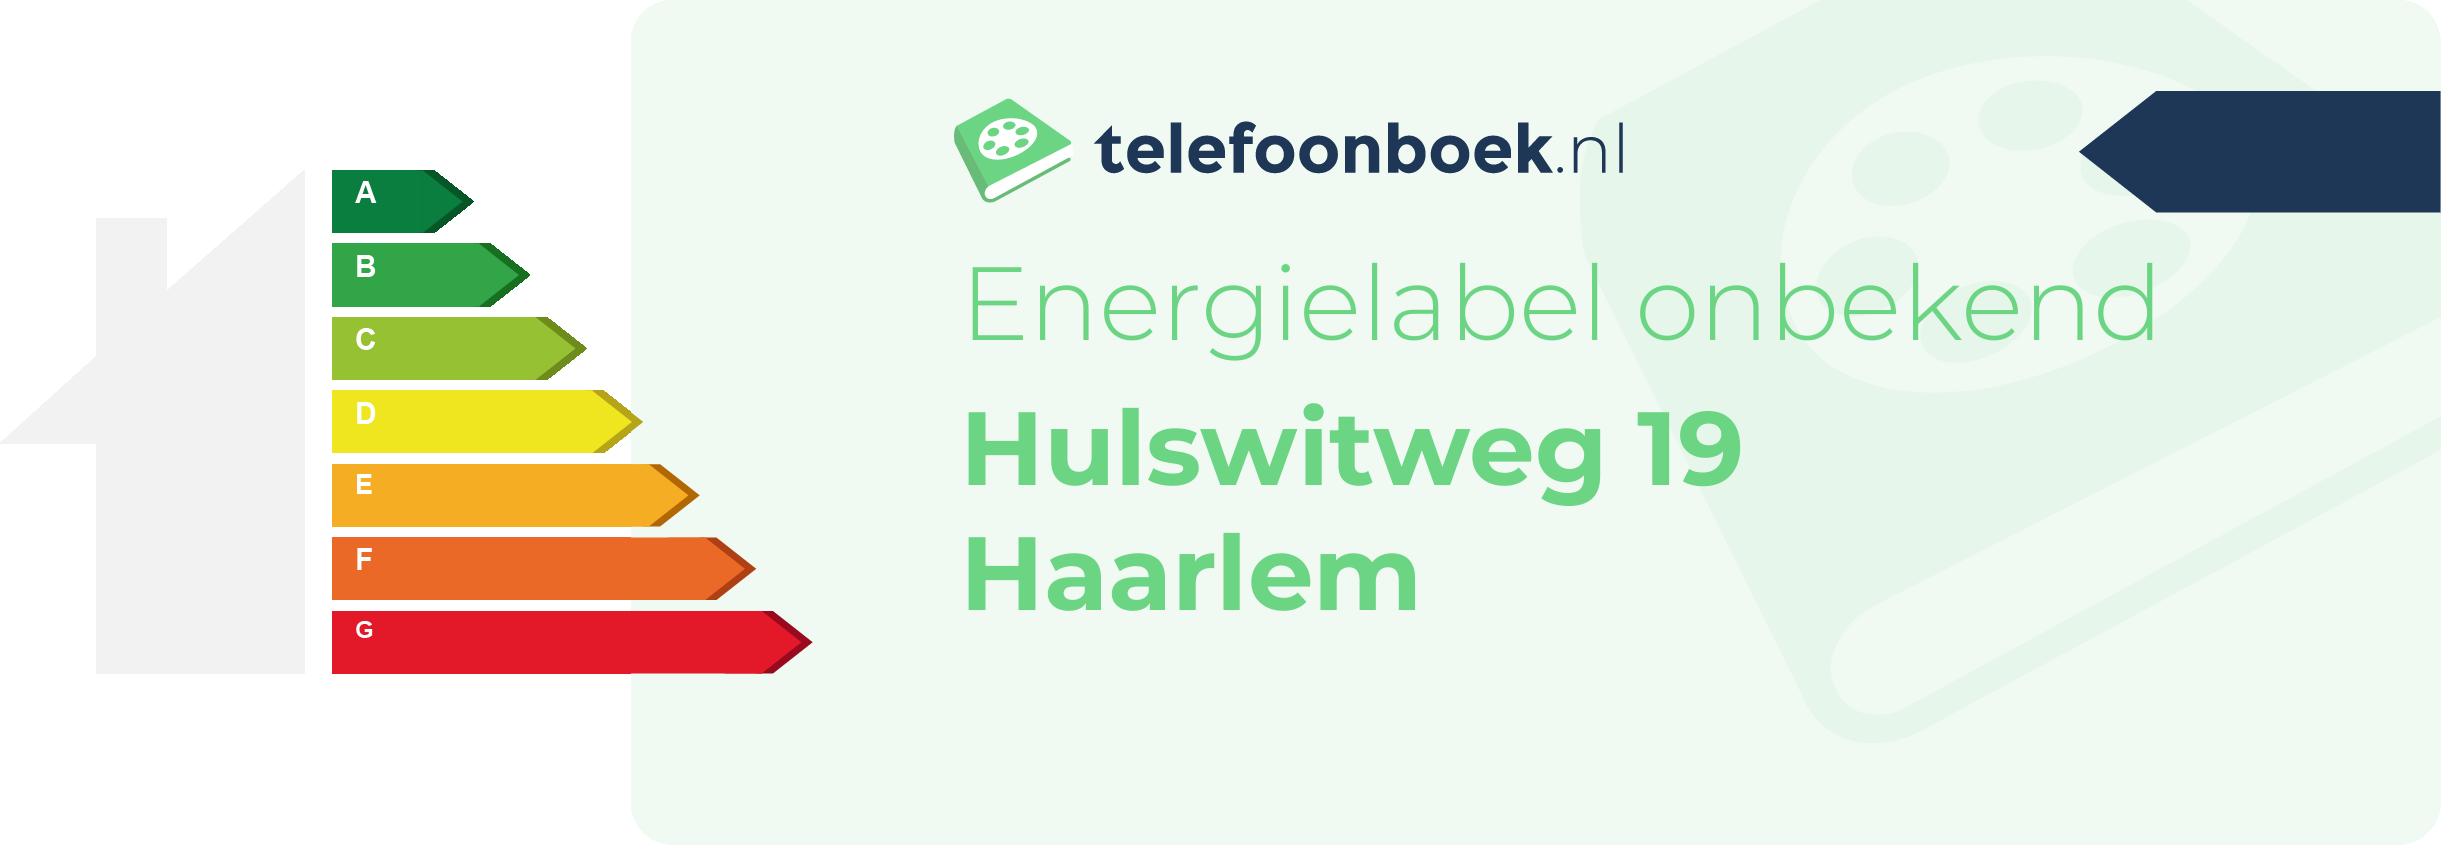 Energielabel Hulswitweg 19 Haarlem